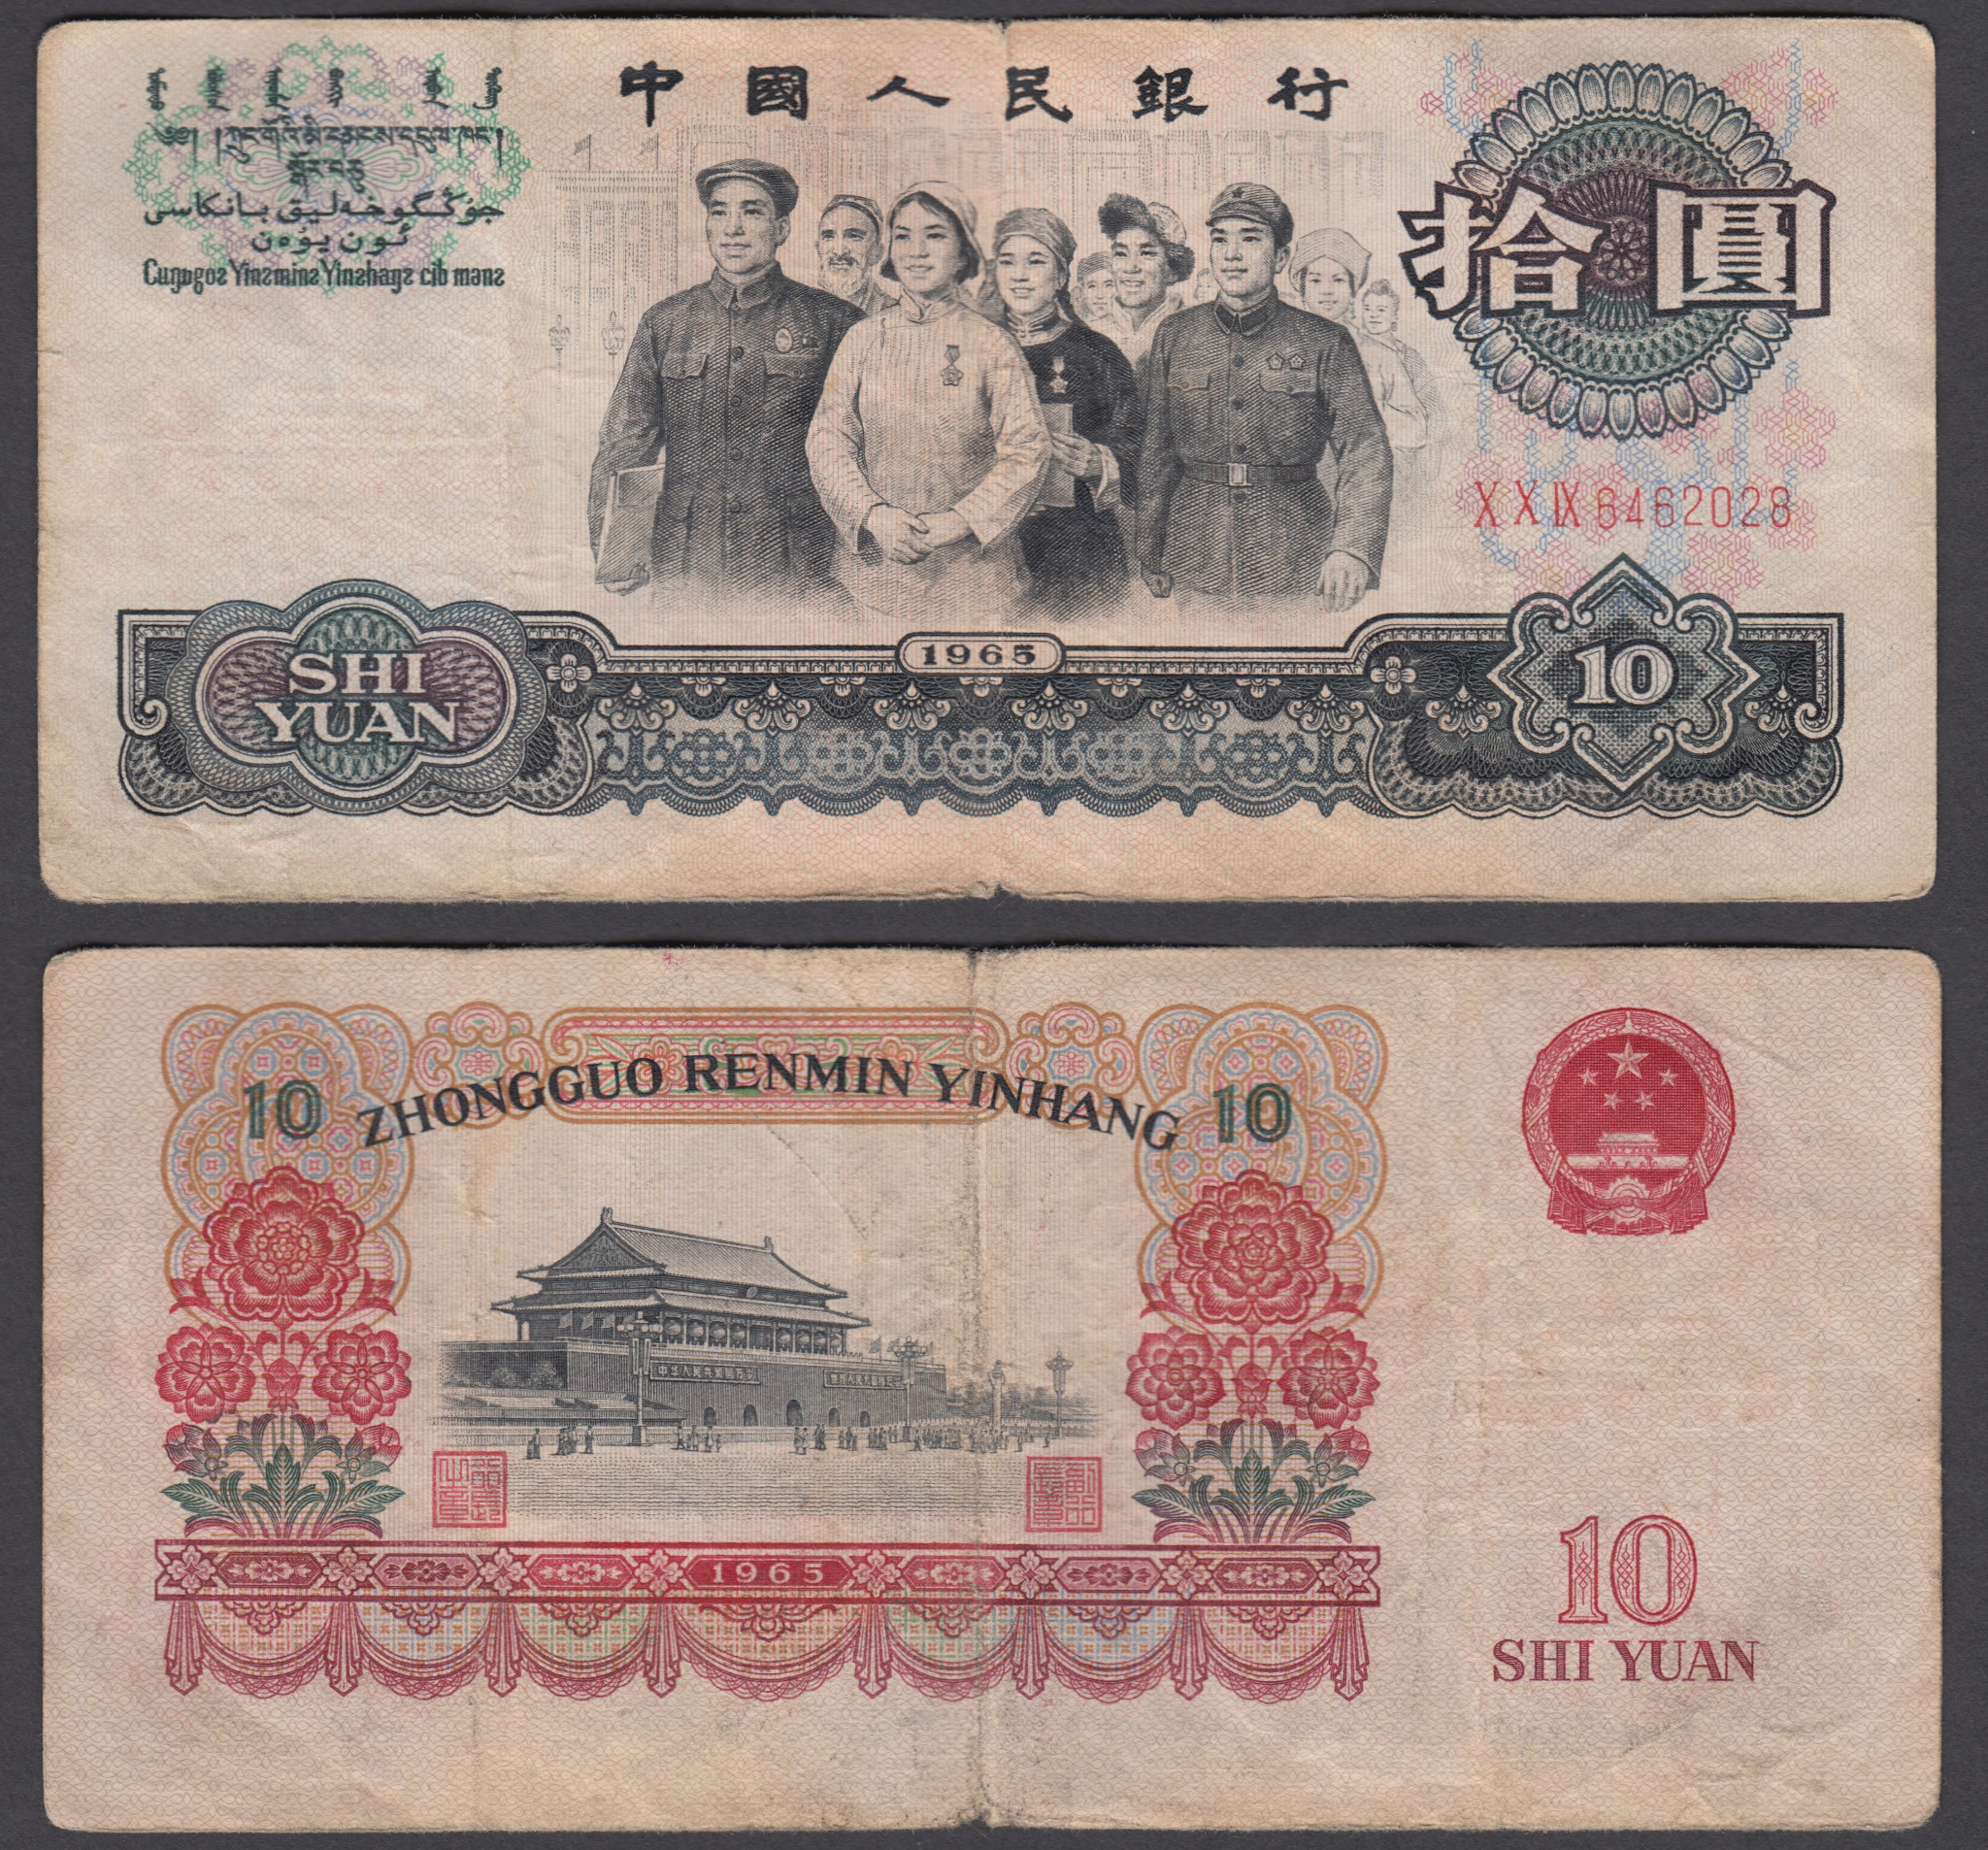 AUNC-UNC 10 Yuan China 3rd P-879 1965